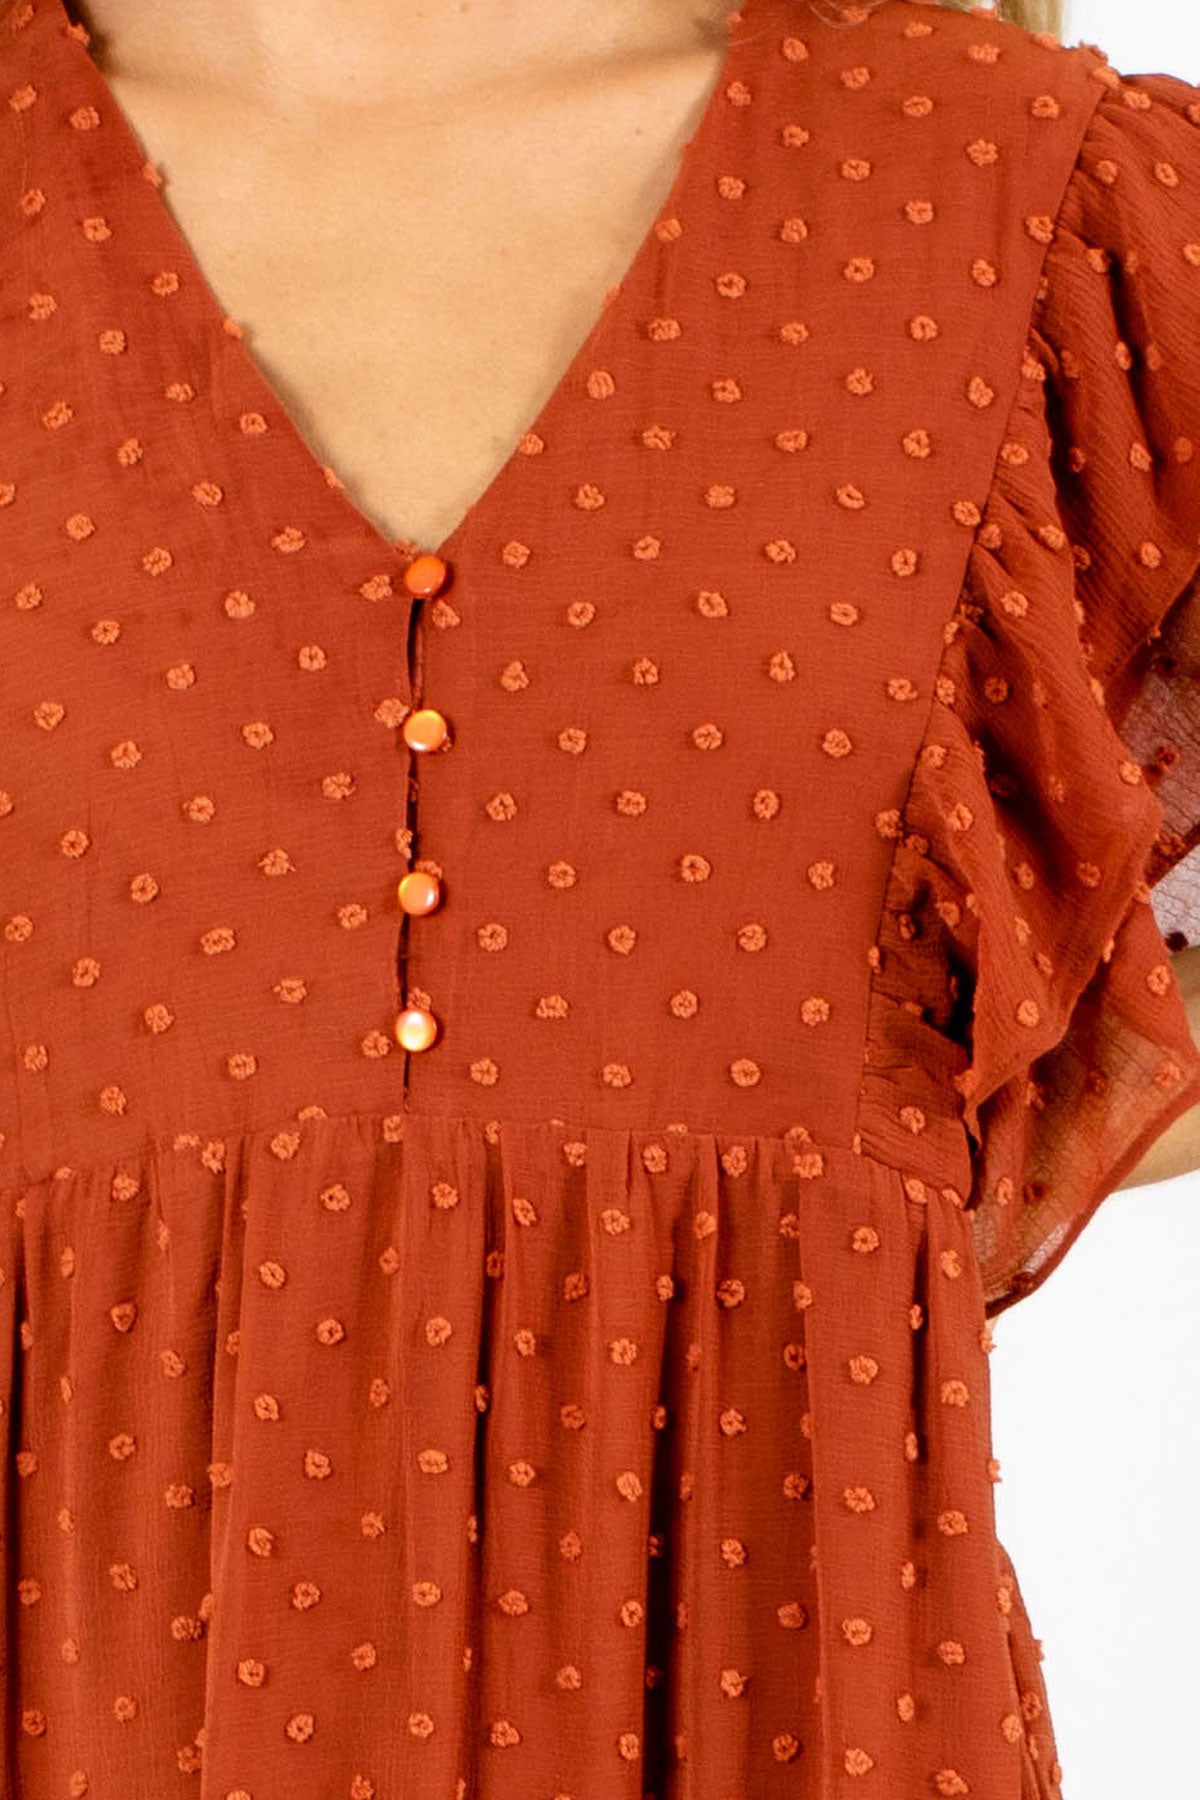 Rust Orange Polka Dot Dress.